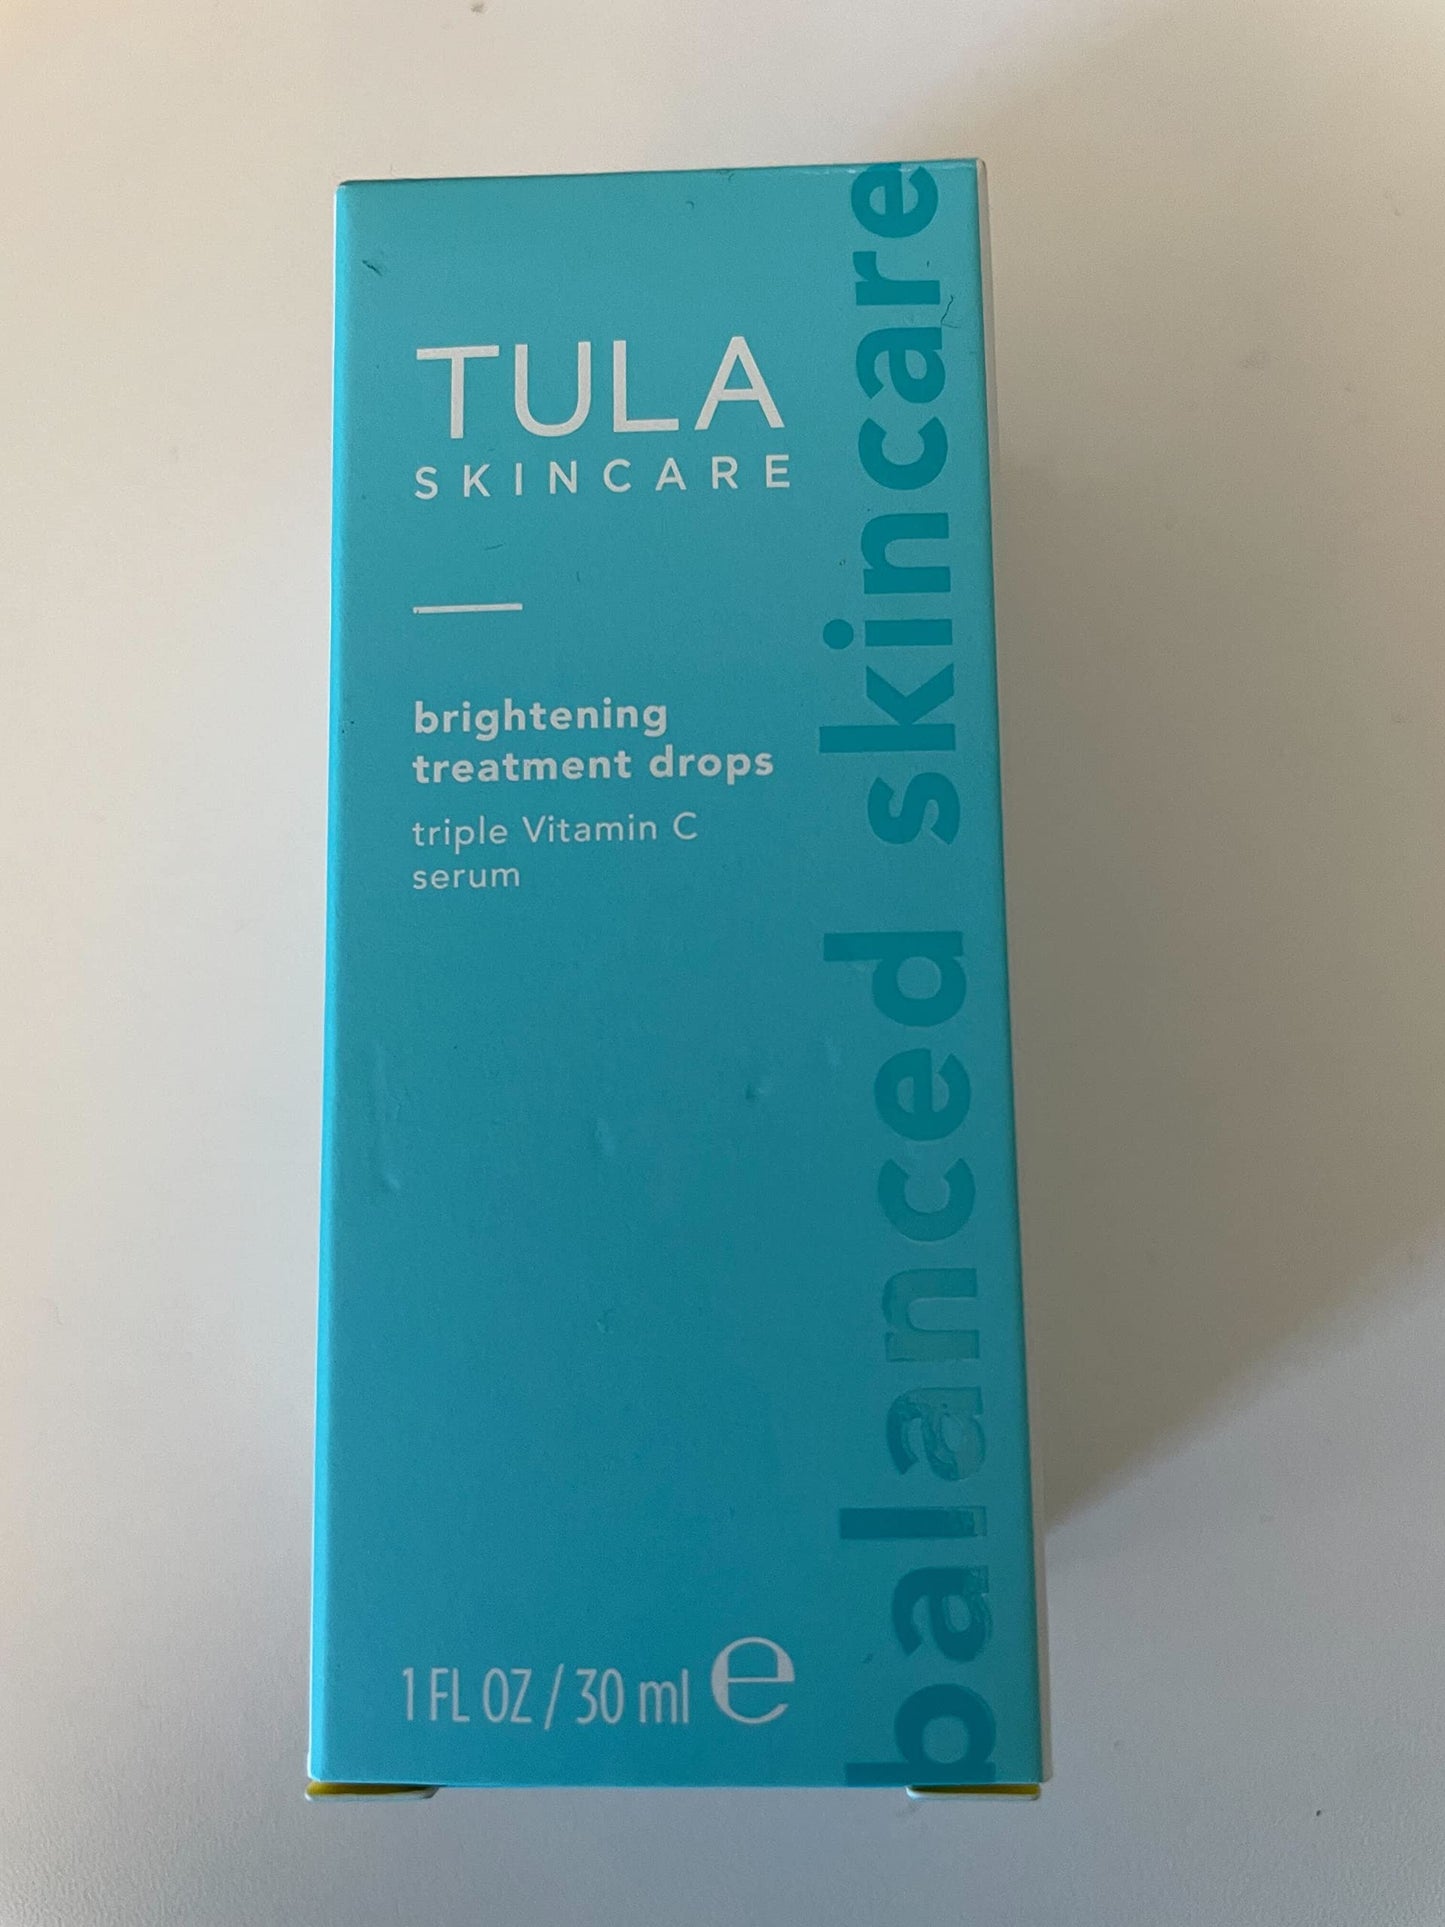 TULA Skin Care Brightening Treatment Drops - Vitamin C Serum, Brightens the Look of Dull Skin & Dark Spots, 1 fl oz.